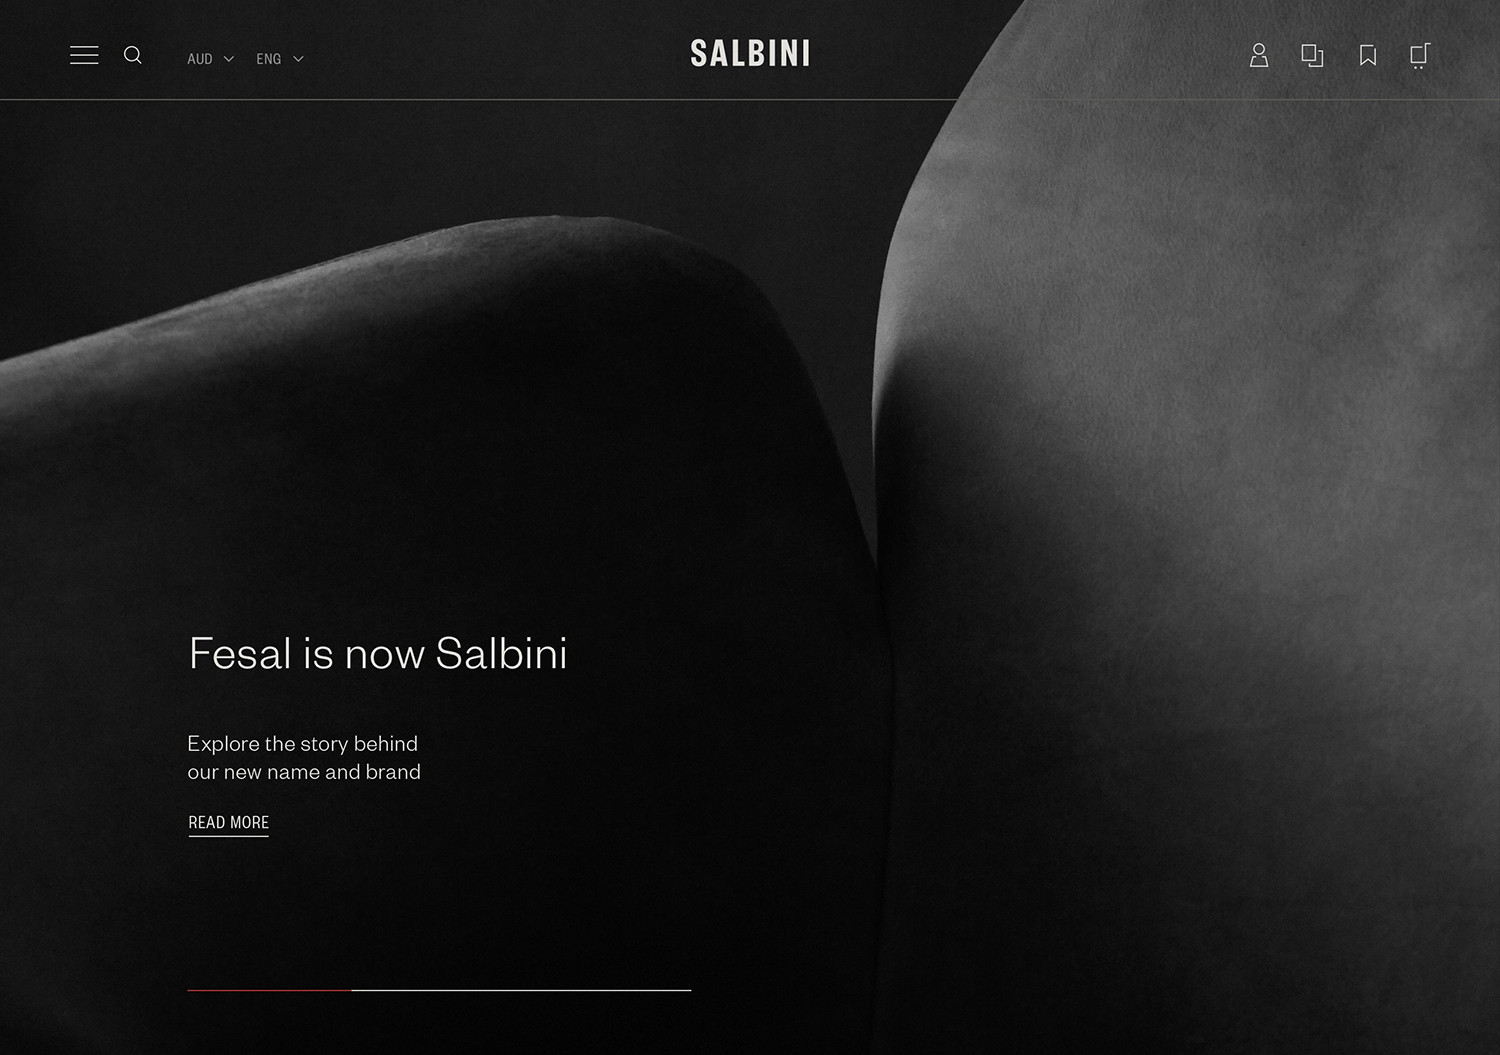 Visual identity and website design by Studio Brave for Italian online furniture retailer Salbini.